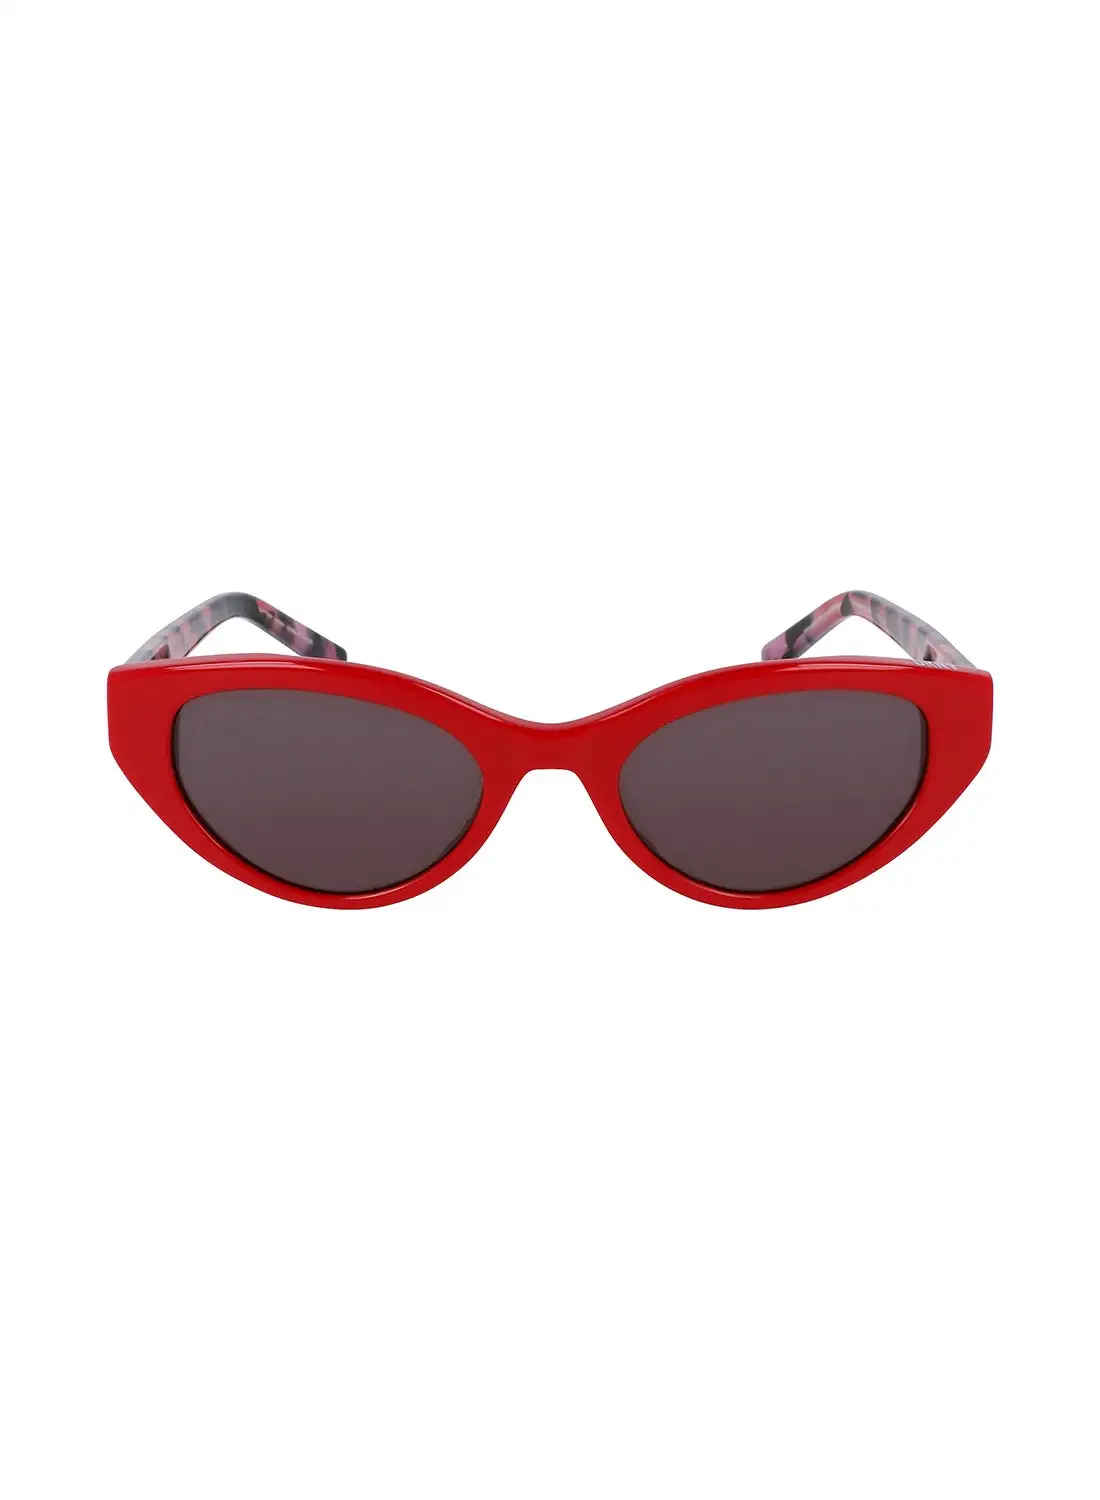 DKNY Women's Oval Sunglasses - DK548S-500-5120 - Lens Size: 51 Mm